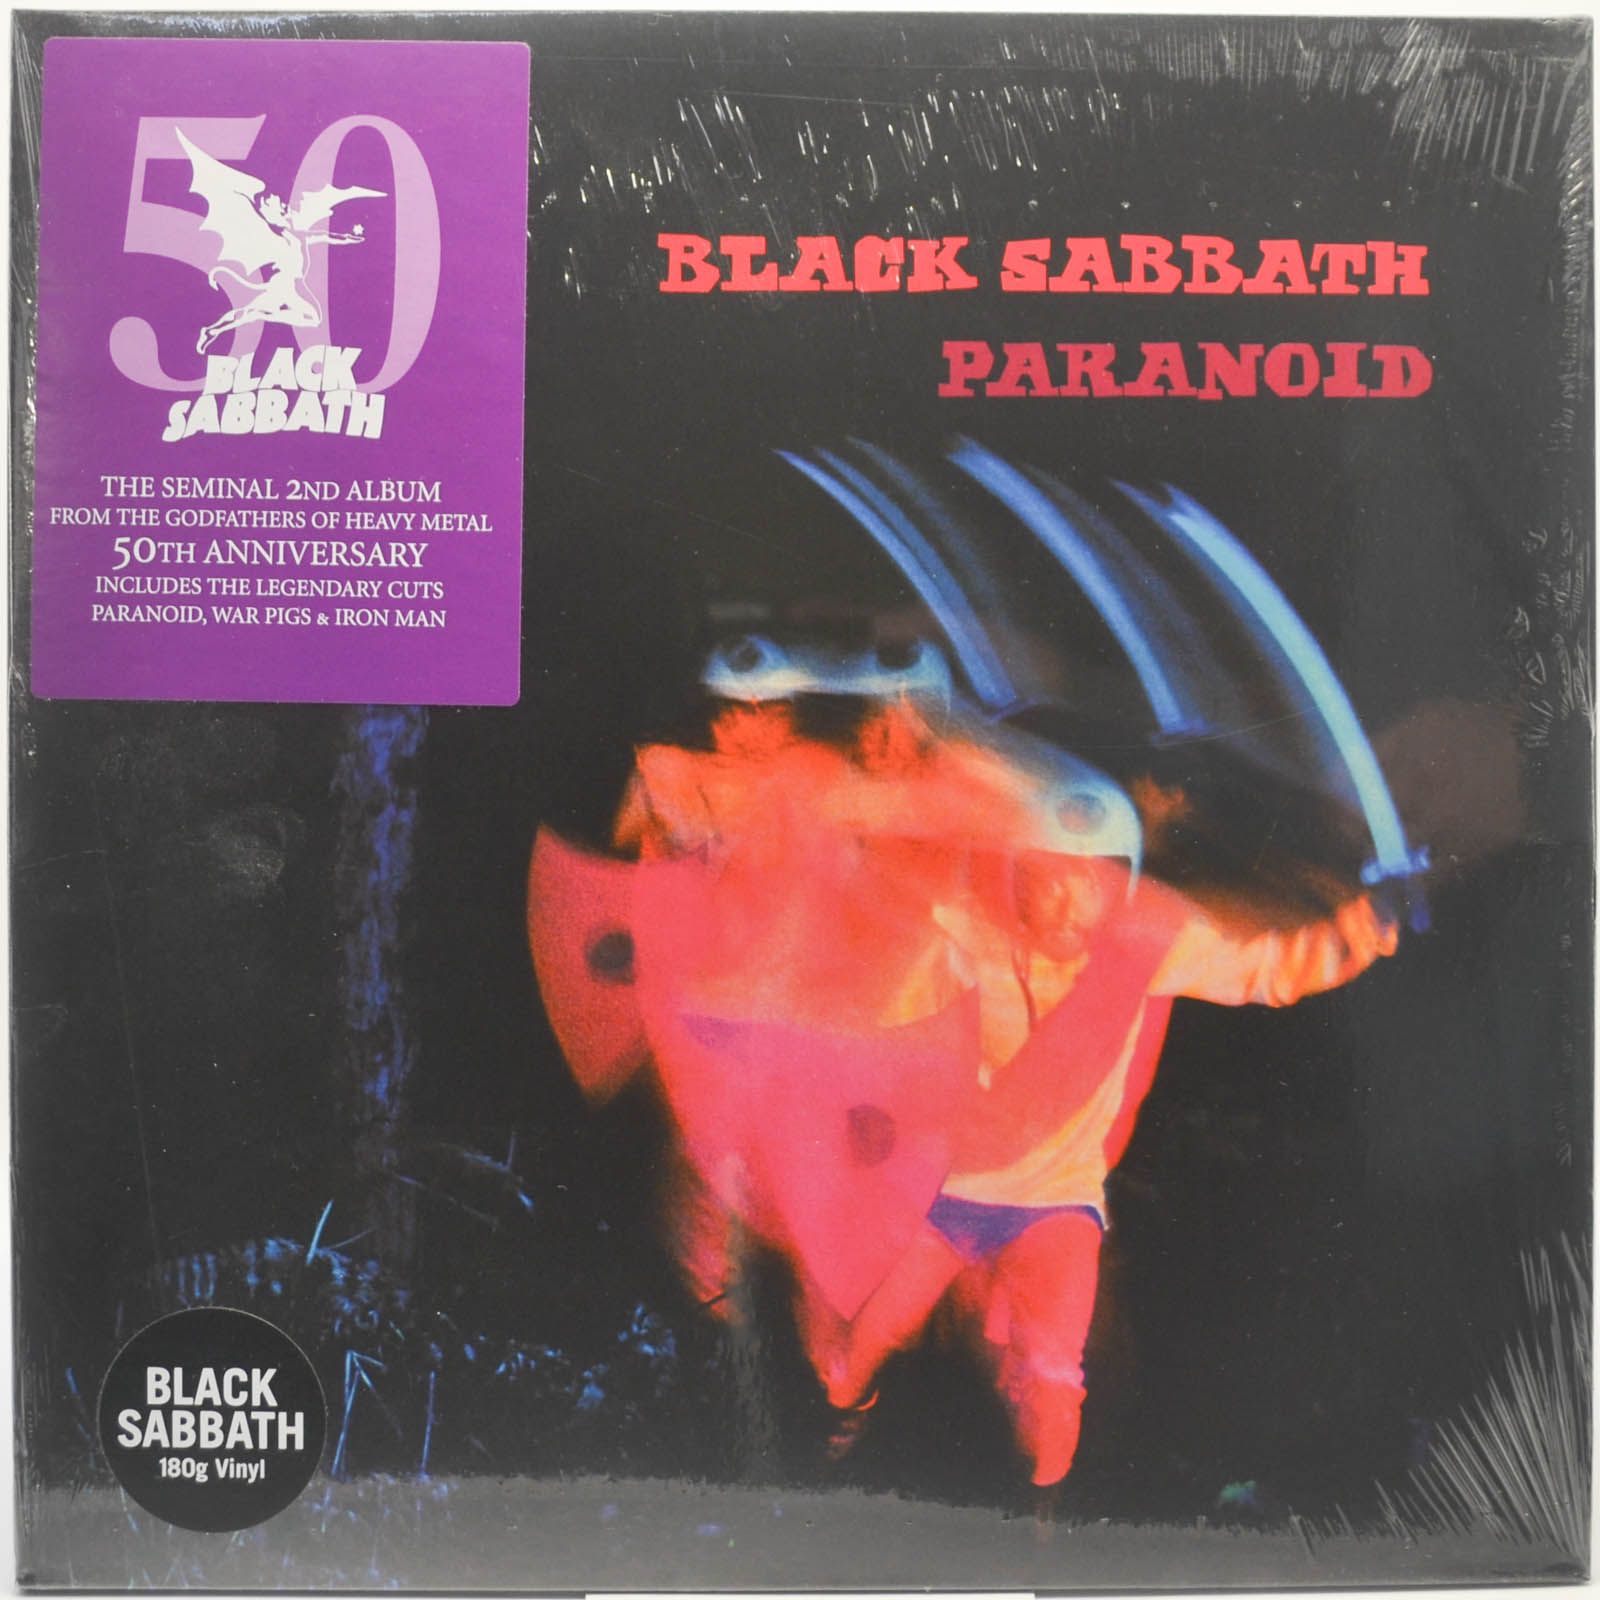 Black Sabbath — Paranoid, 1970